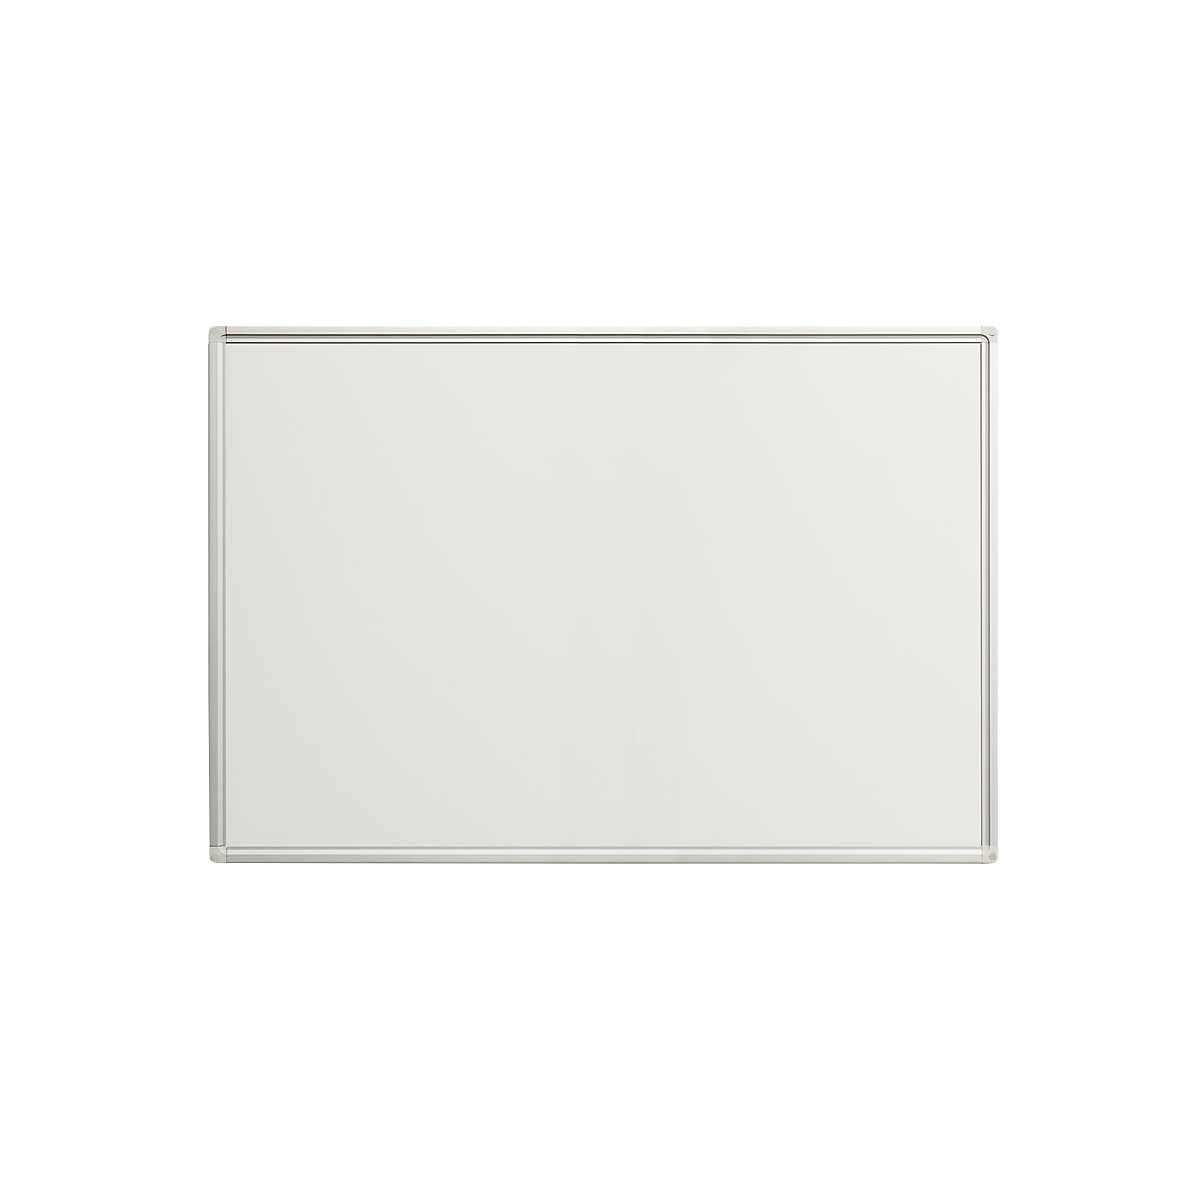 Economy whiteboard – eurokraft pro, sheet steel, painted, WxH 900 x 600 mm-8